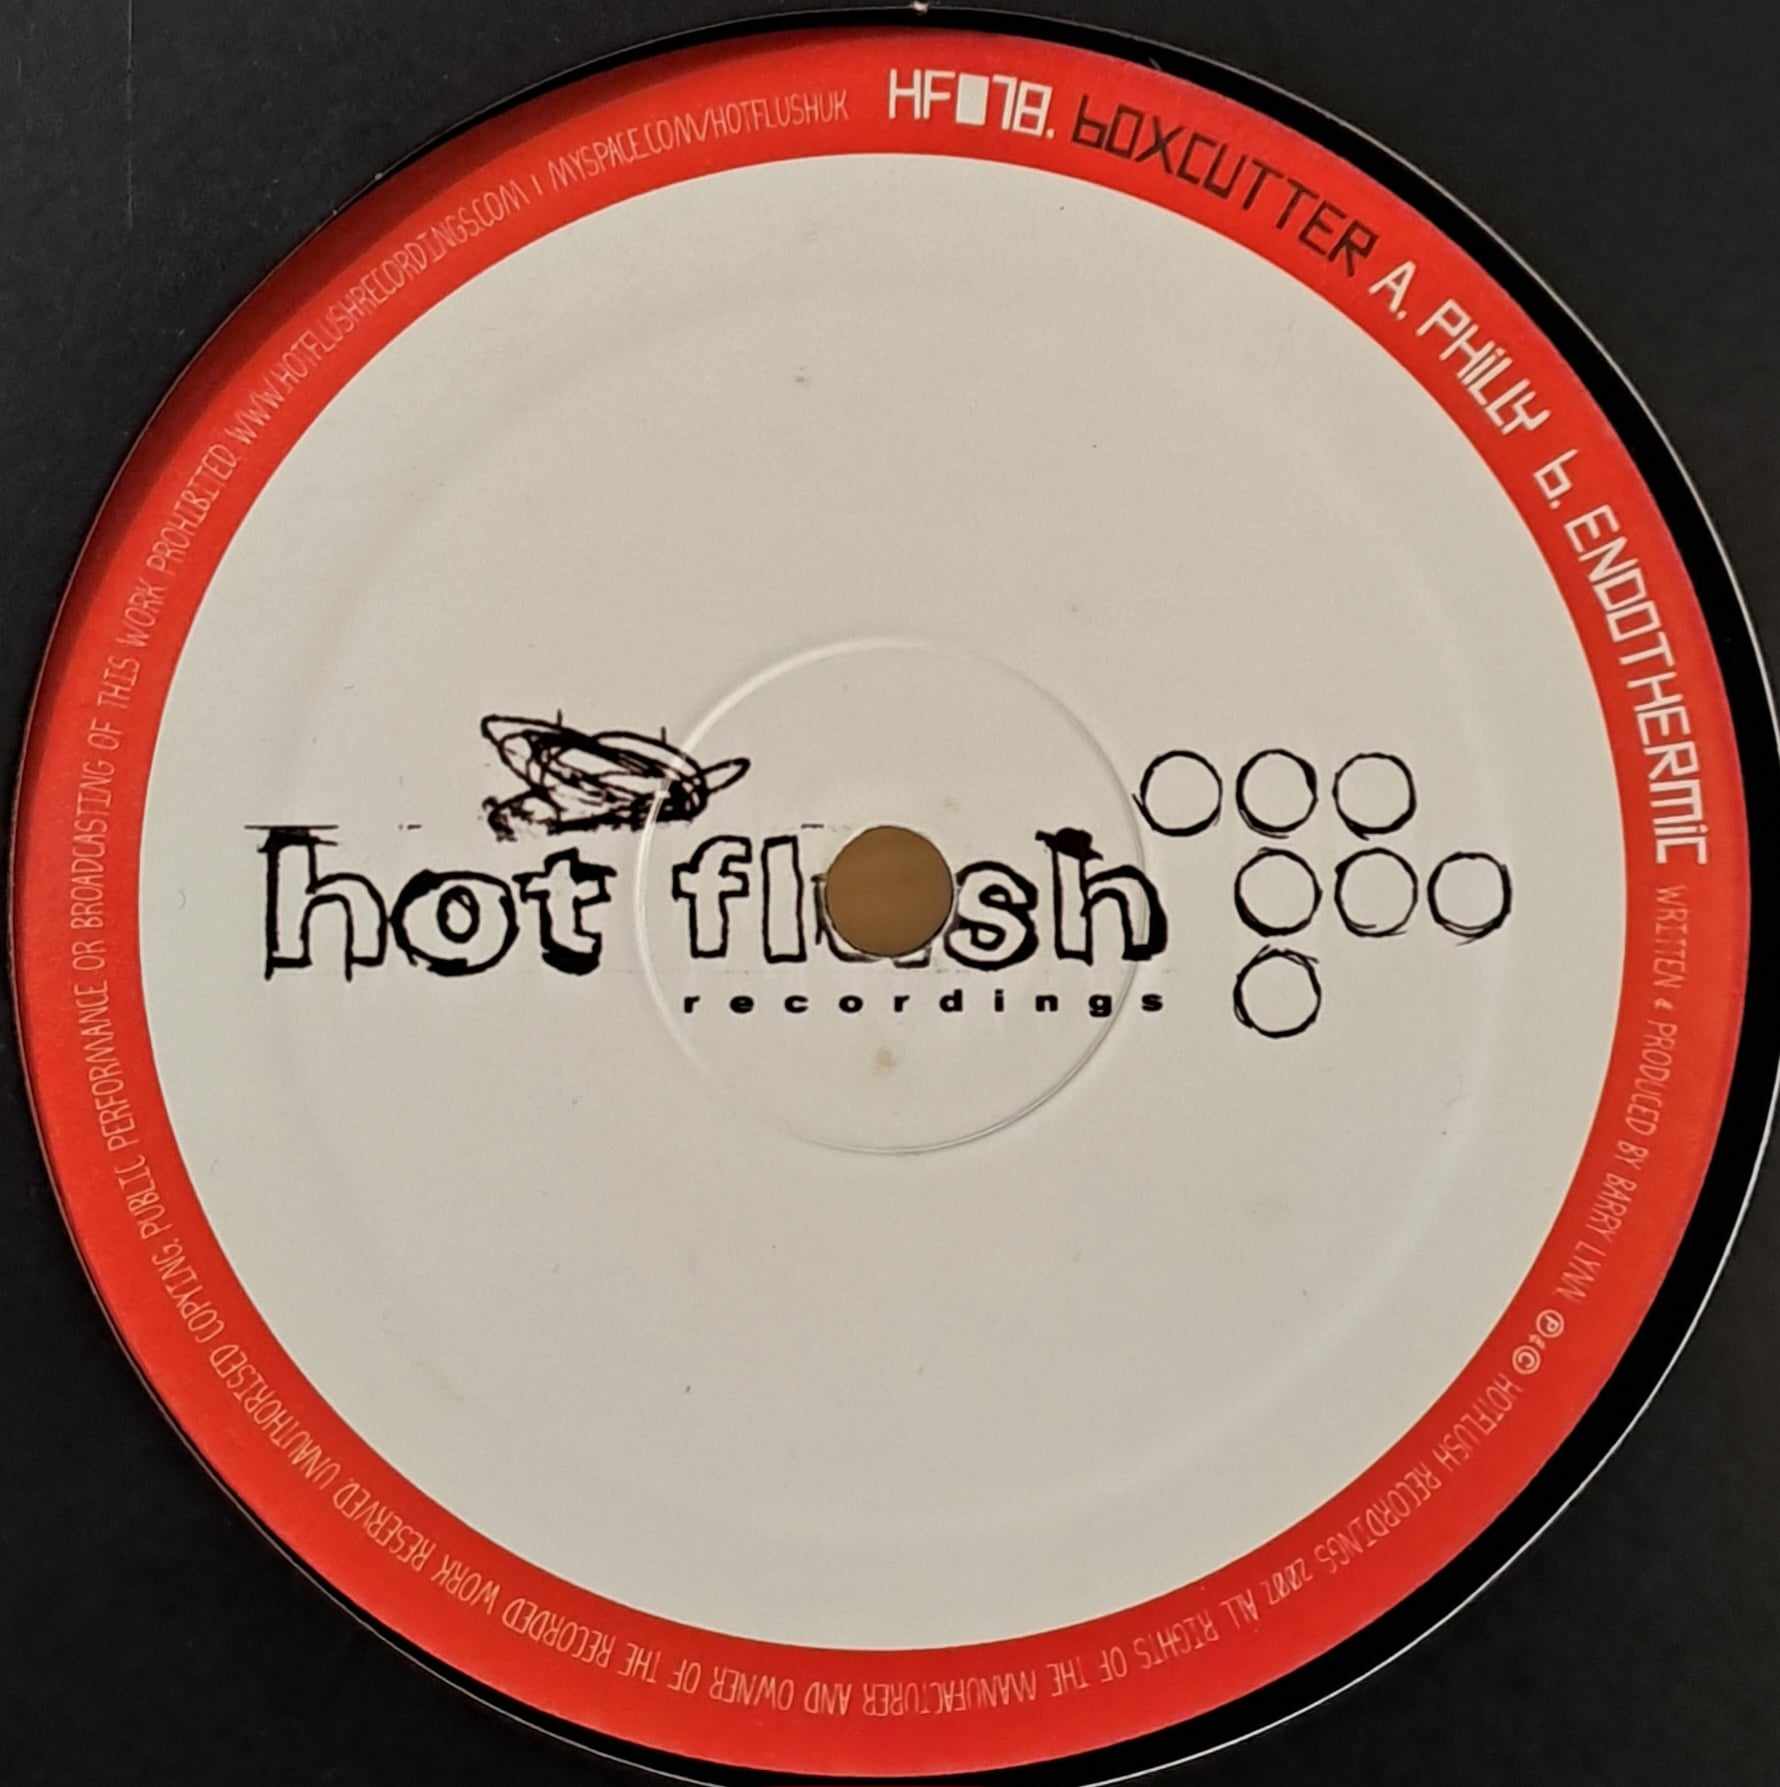 Hotflush Recordings 018 - vinyle break